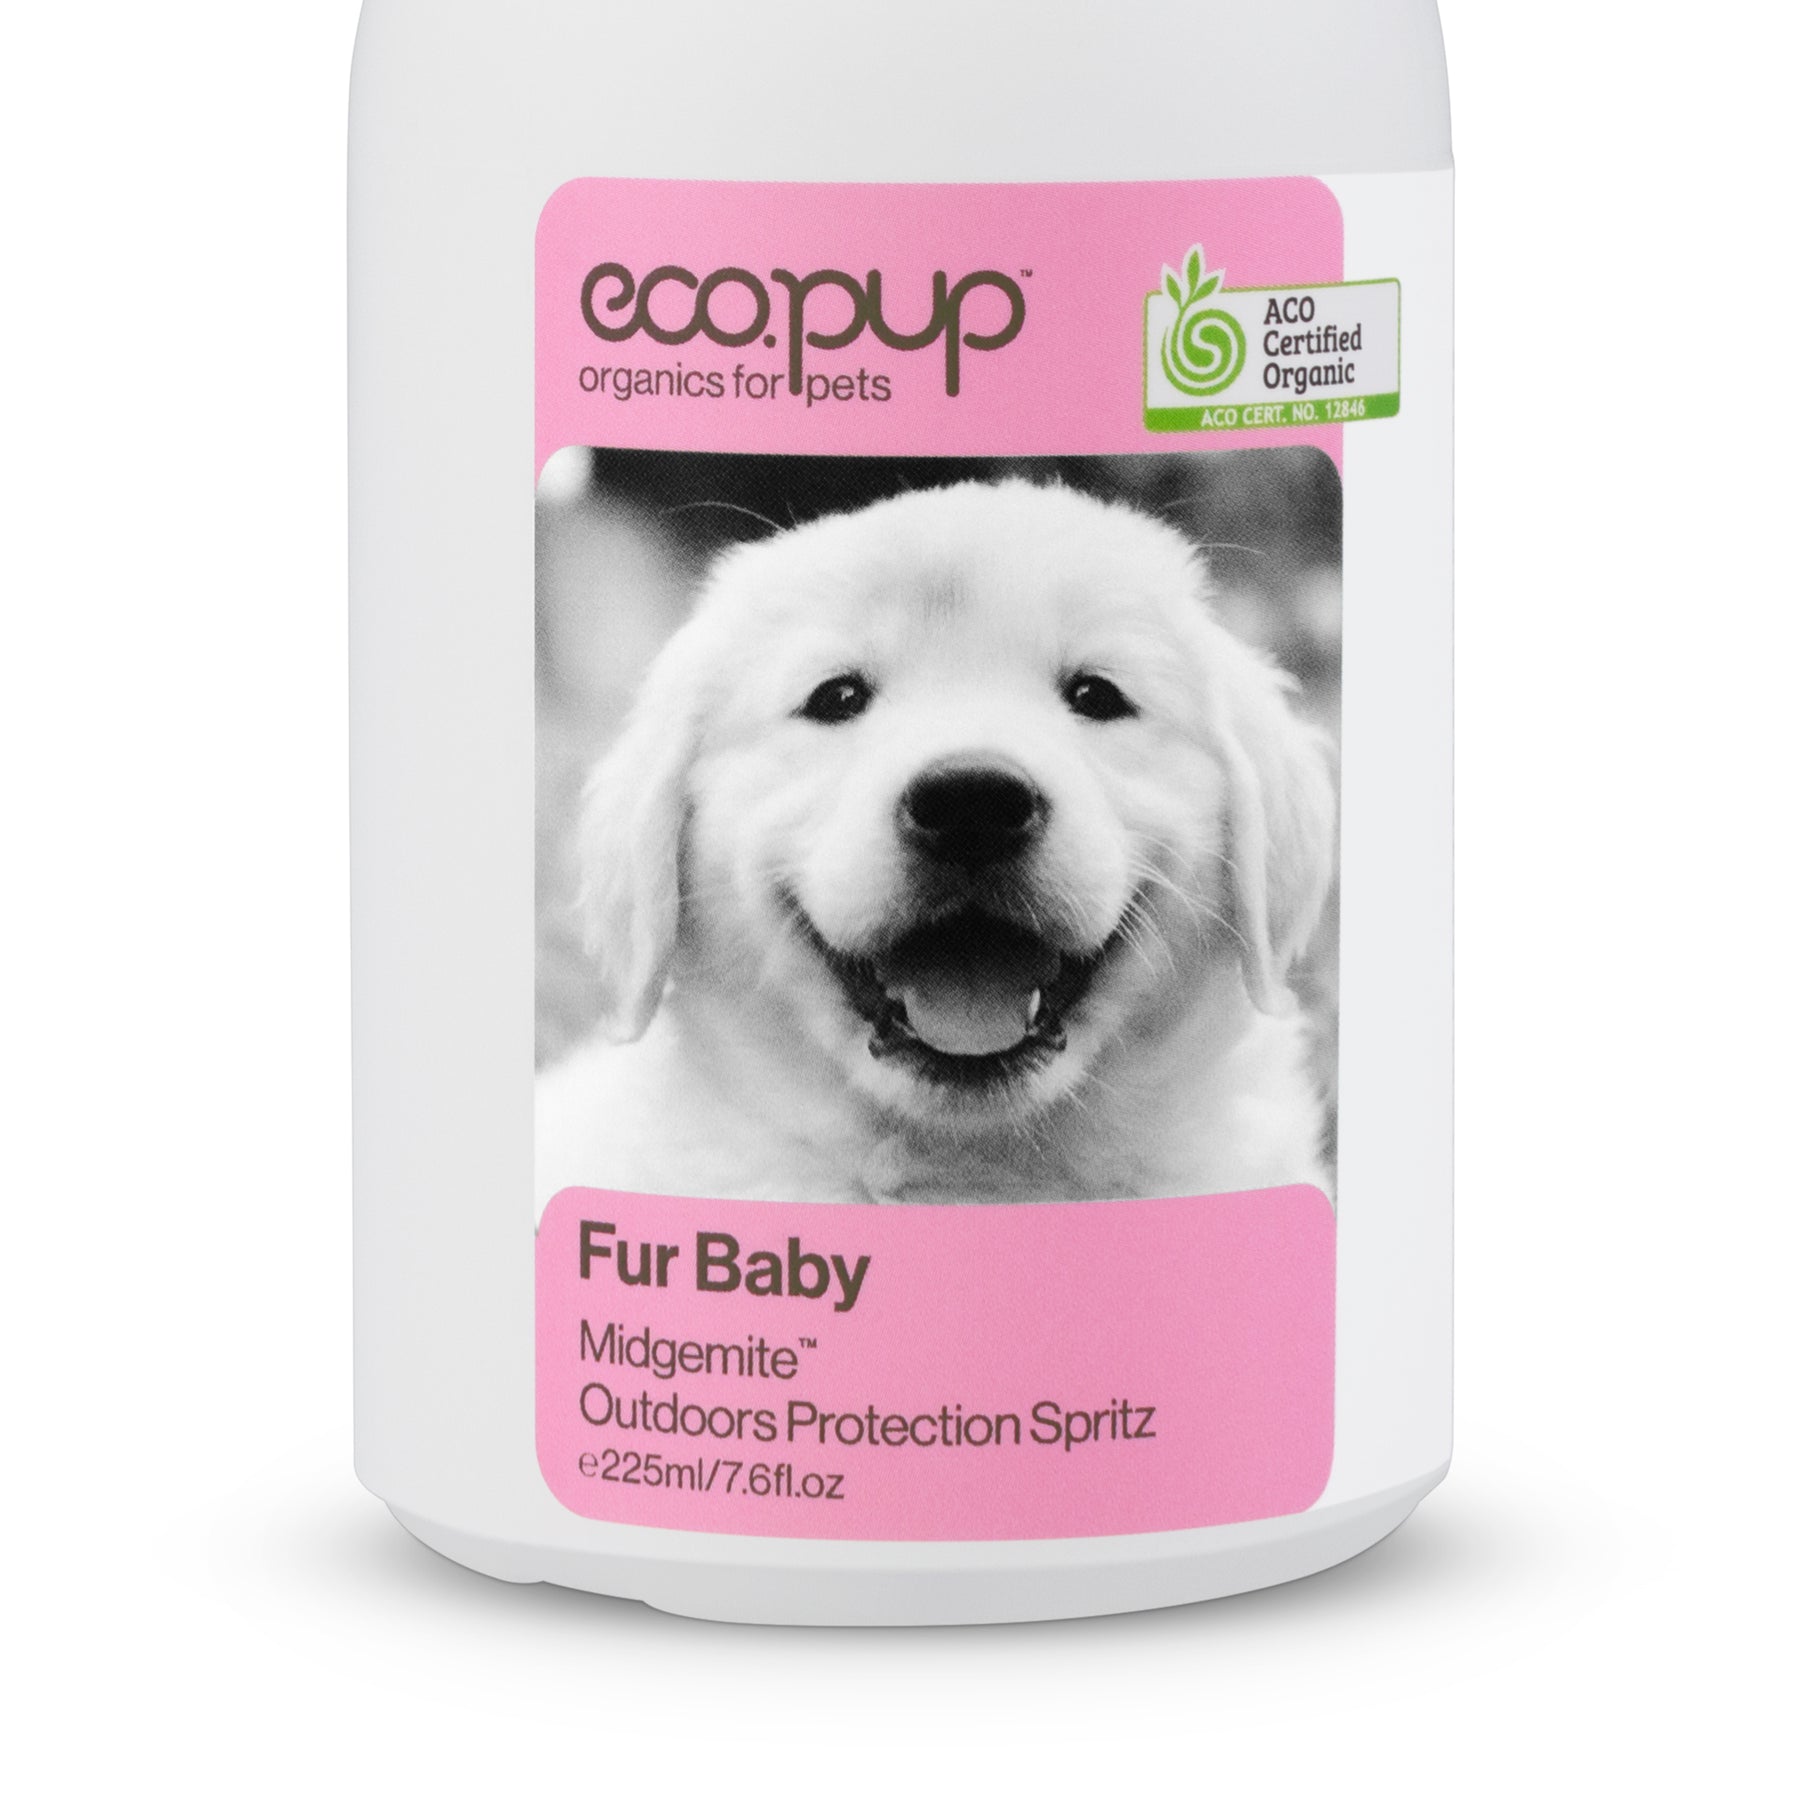 eco.pup Fur Baby Midgemite Outdoors Skin Spritz